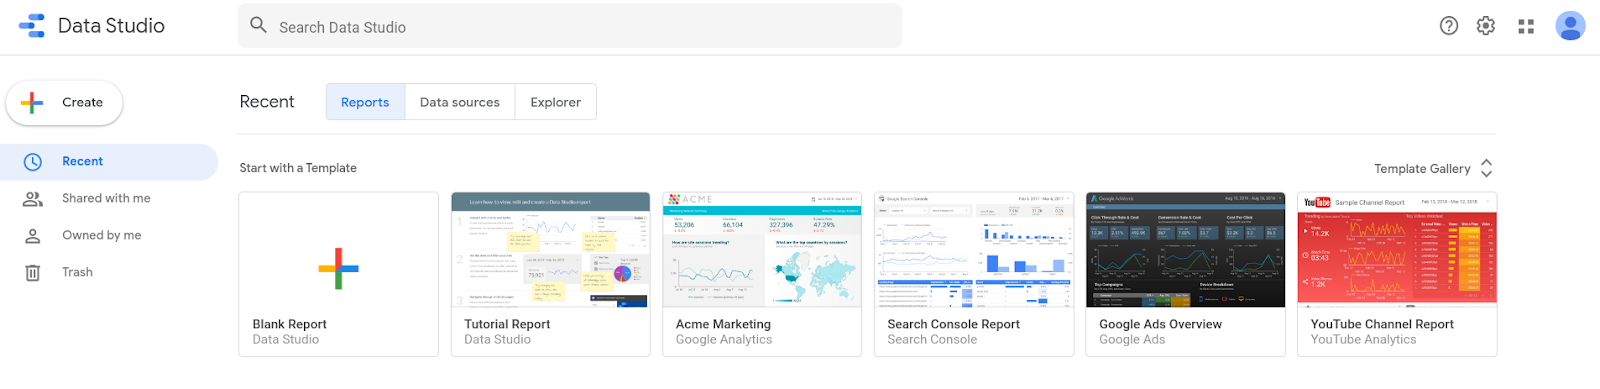 google ads to google data studio - data studio interface